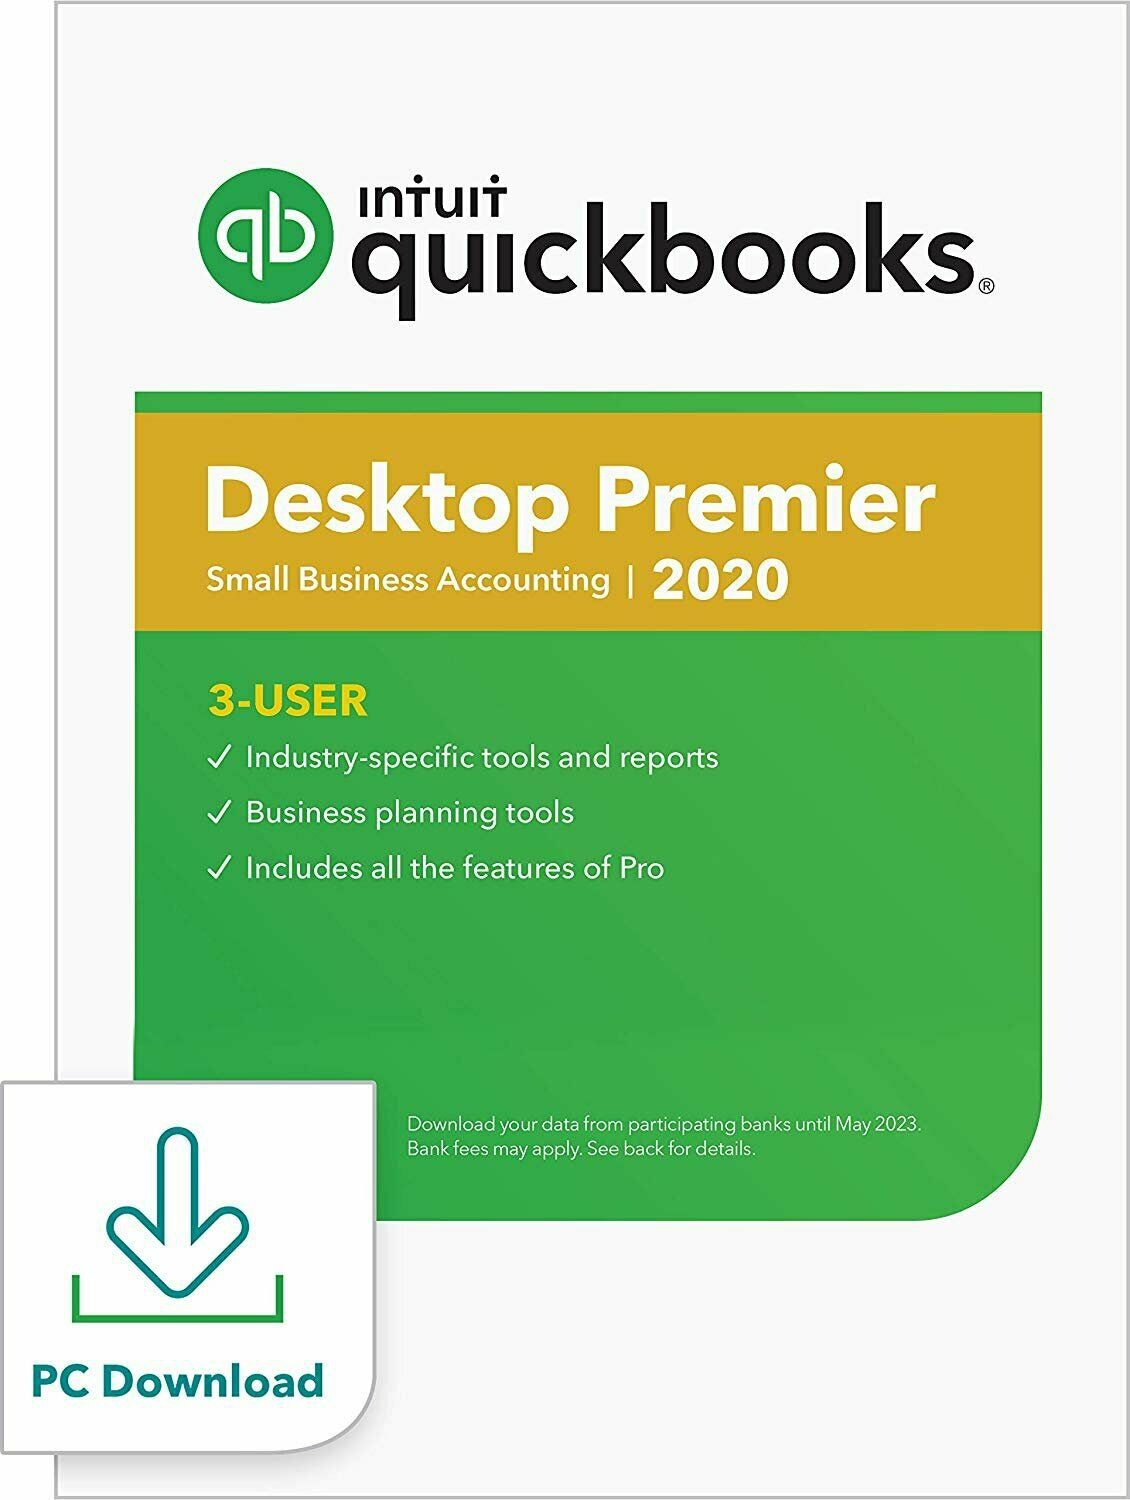 quickbooks desktop premier contractor edition